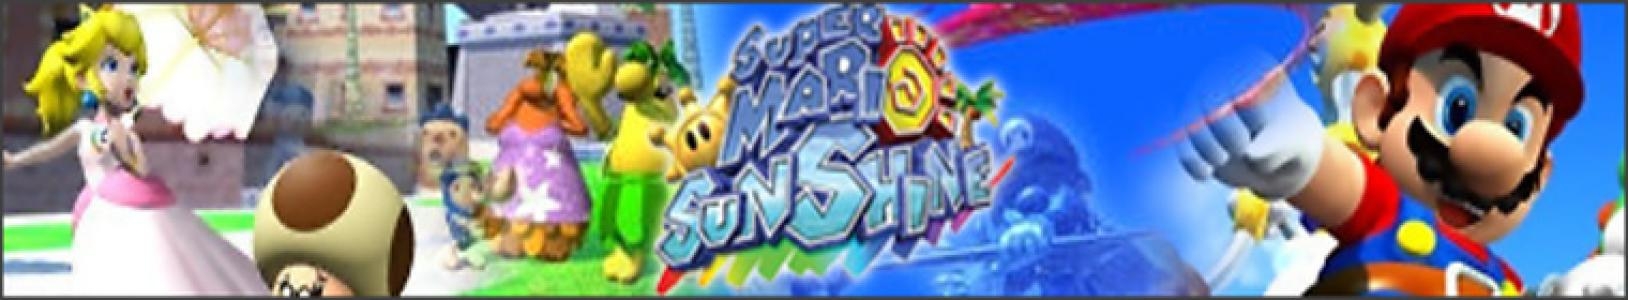 Super Mario Sunshine banner